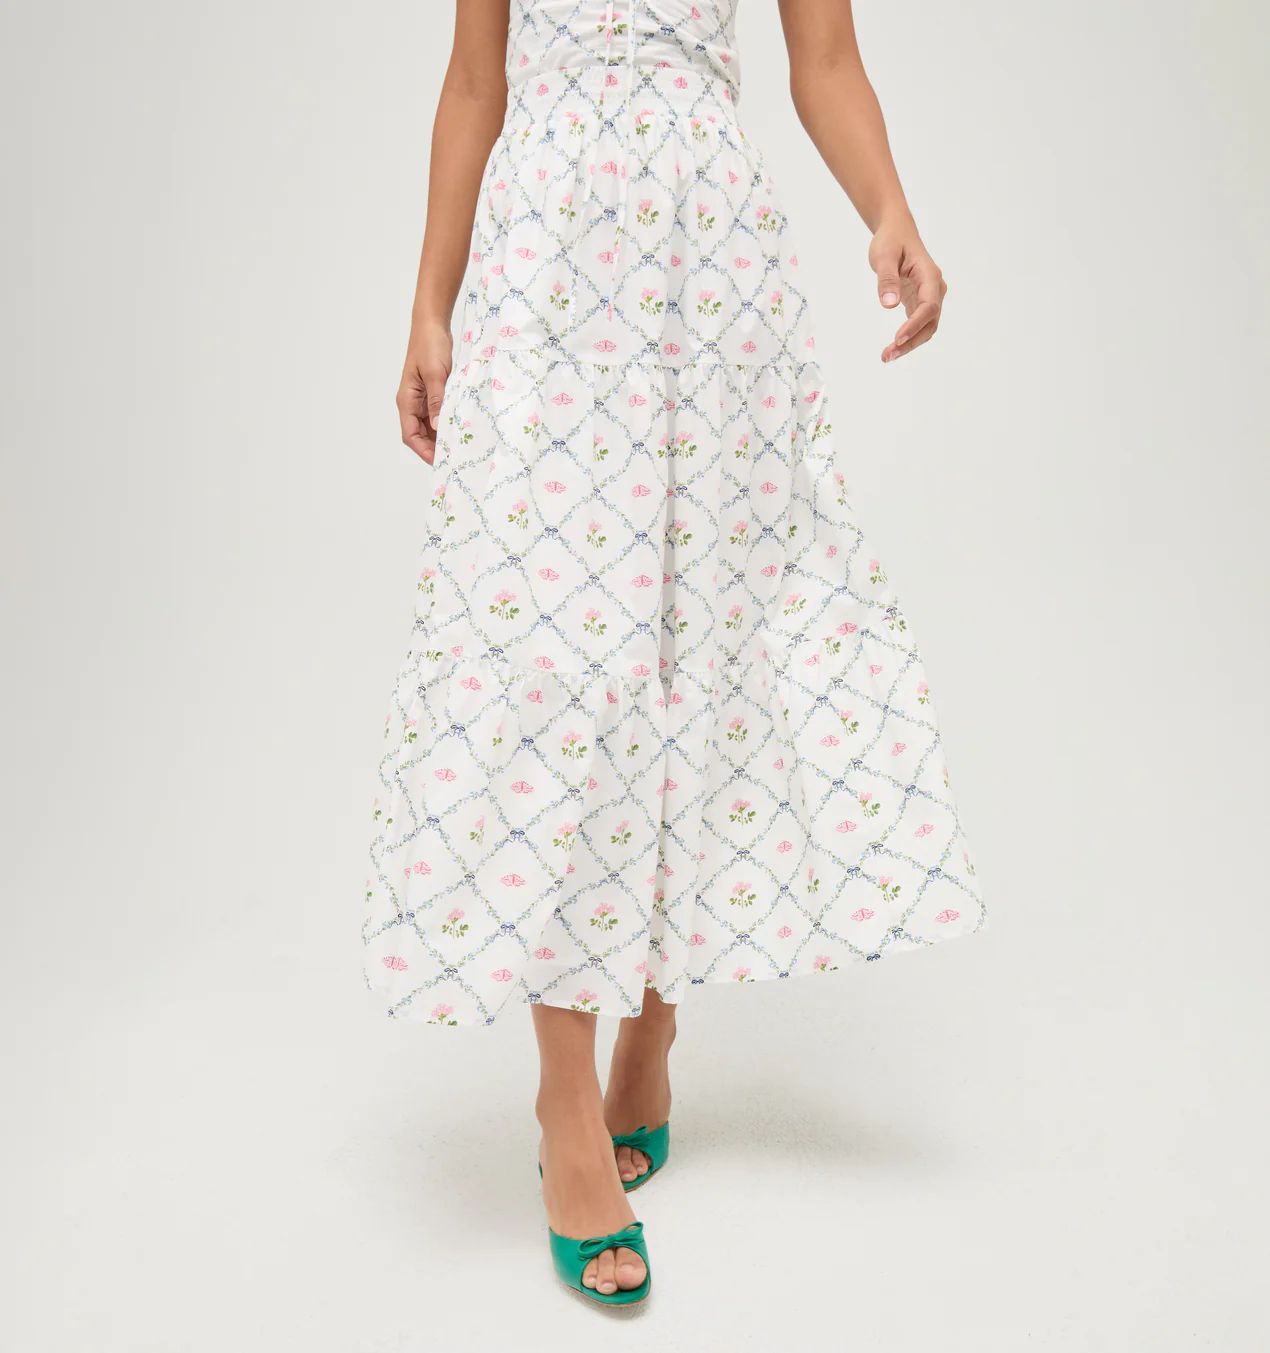 The Florence Nap Skirt - Butterfly Trellis Cotton Poplin | Hill House Home